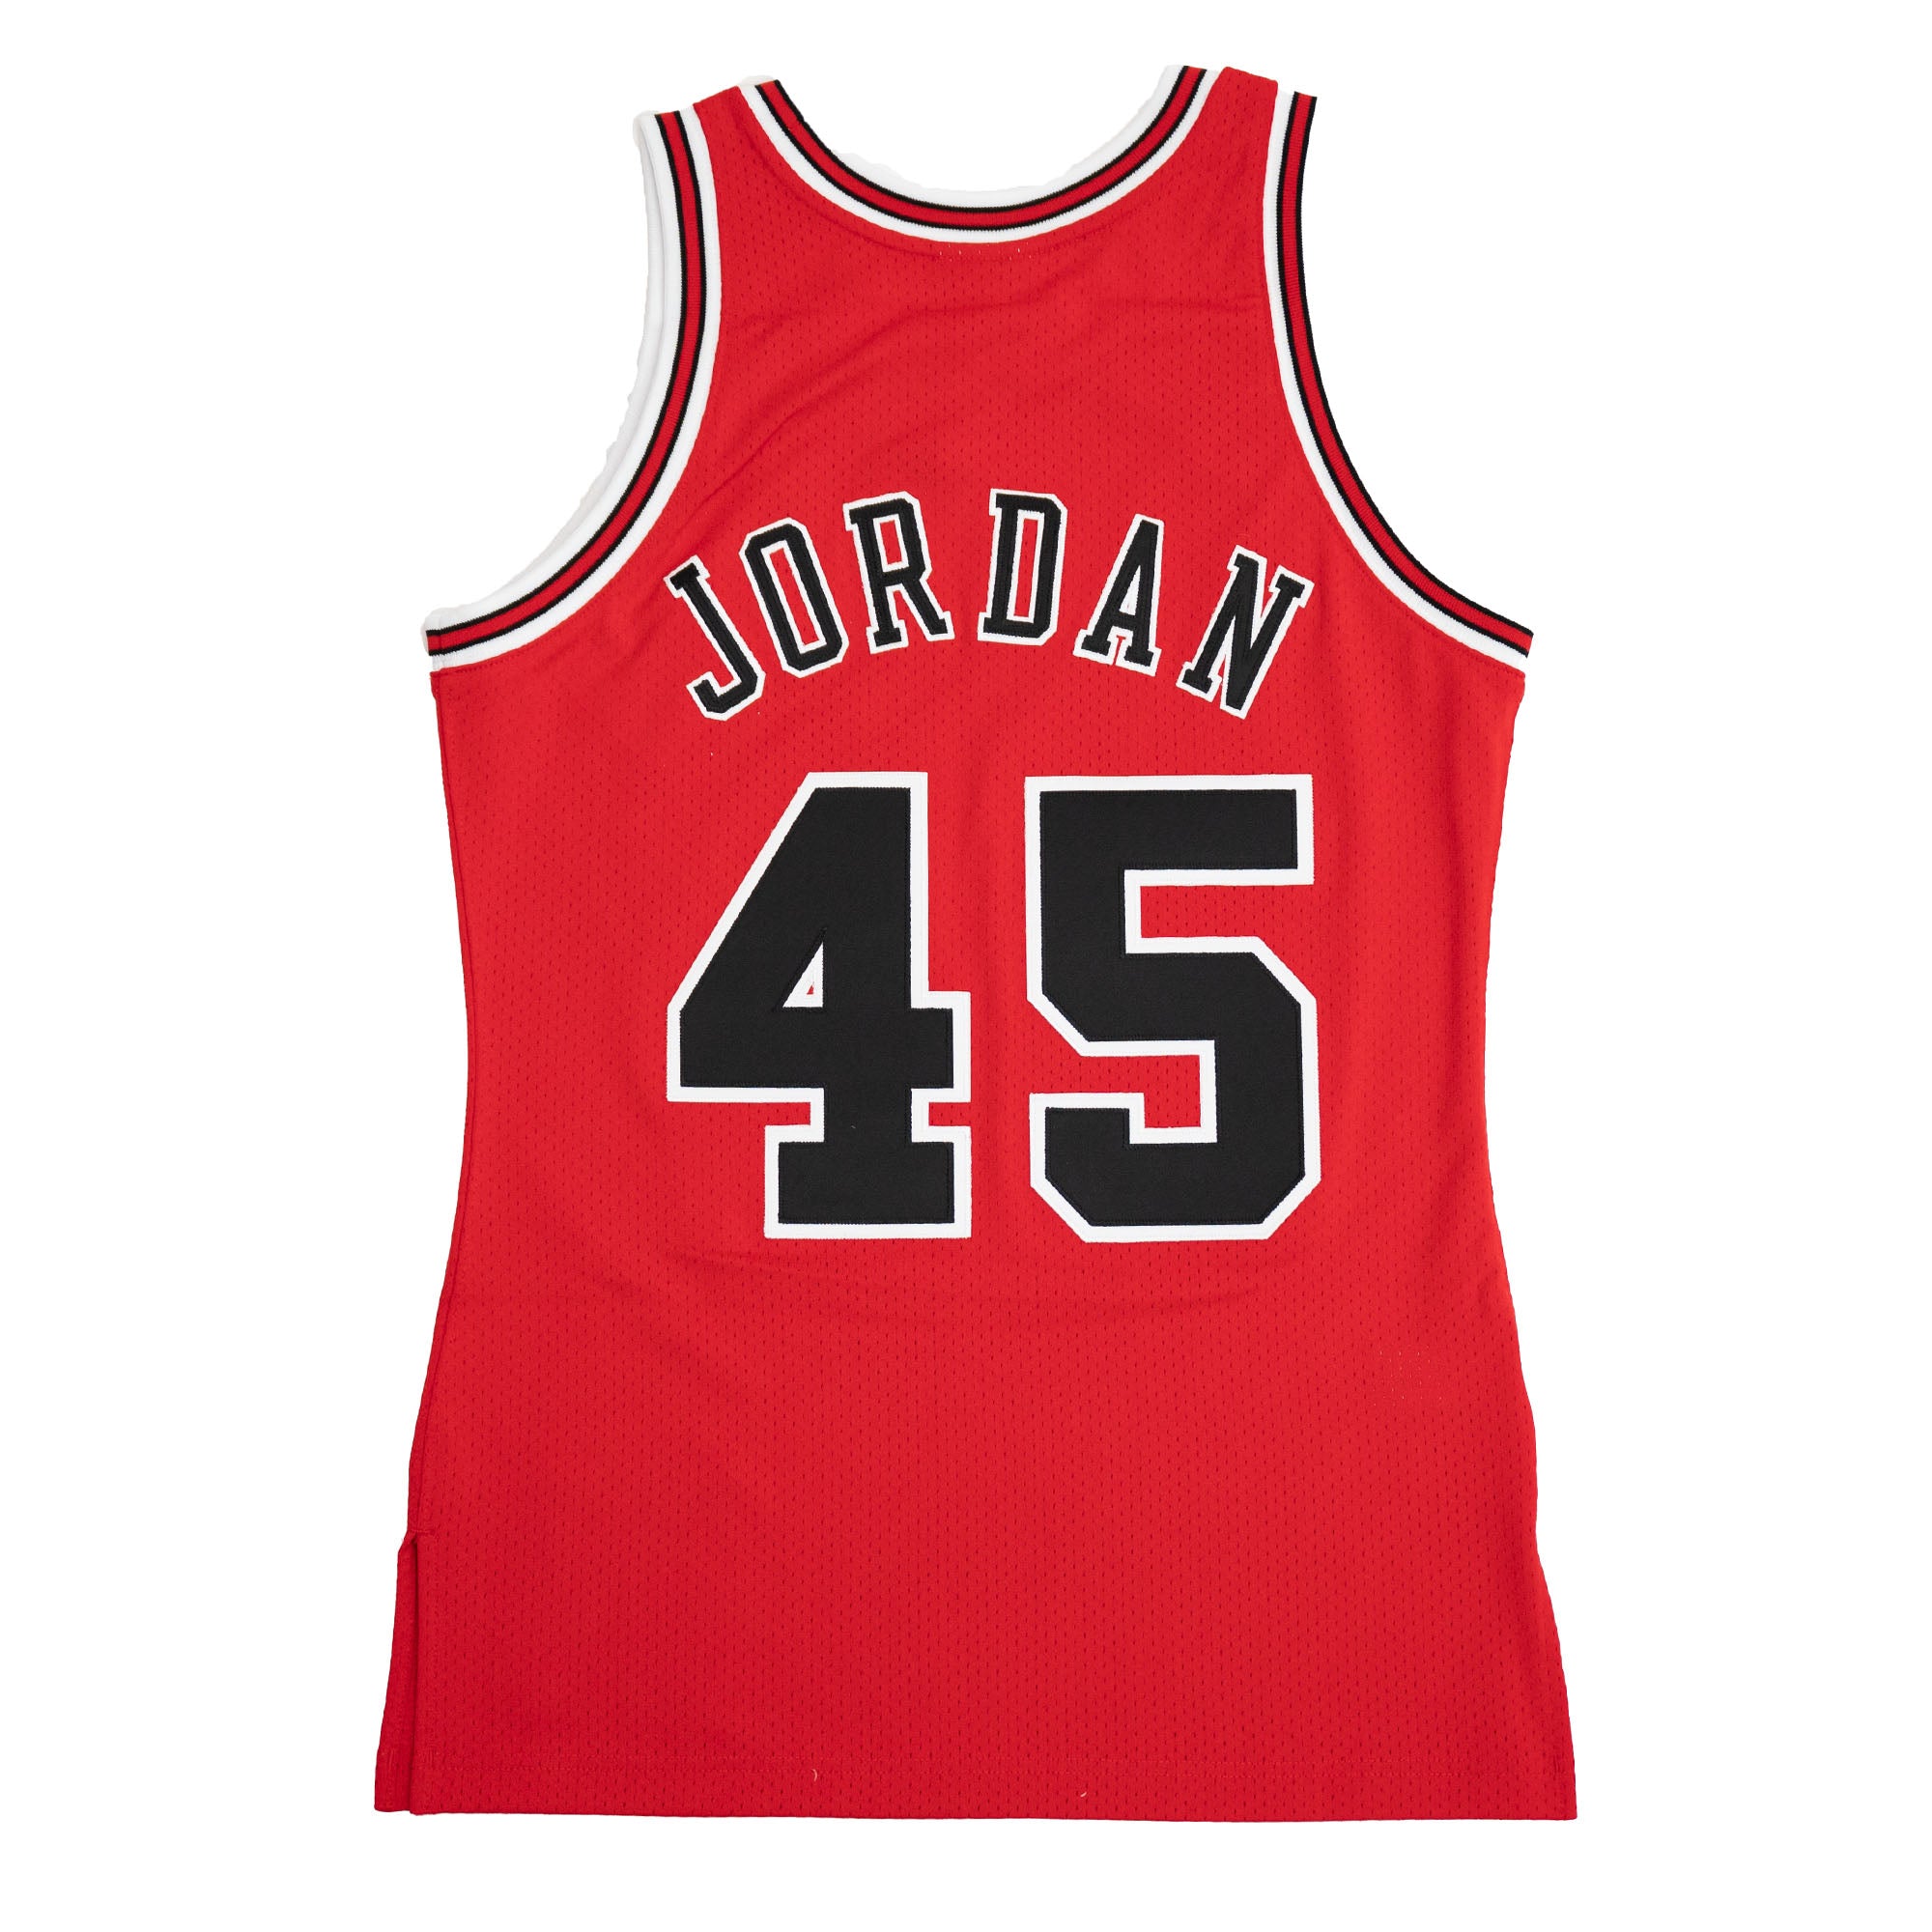 Chicago Bulls Michael Jordan 1994-95 Road 45 Authentic Jersey By